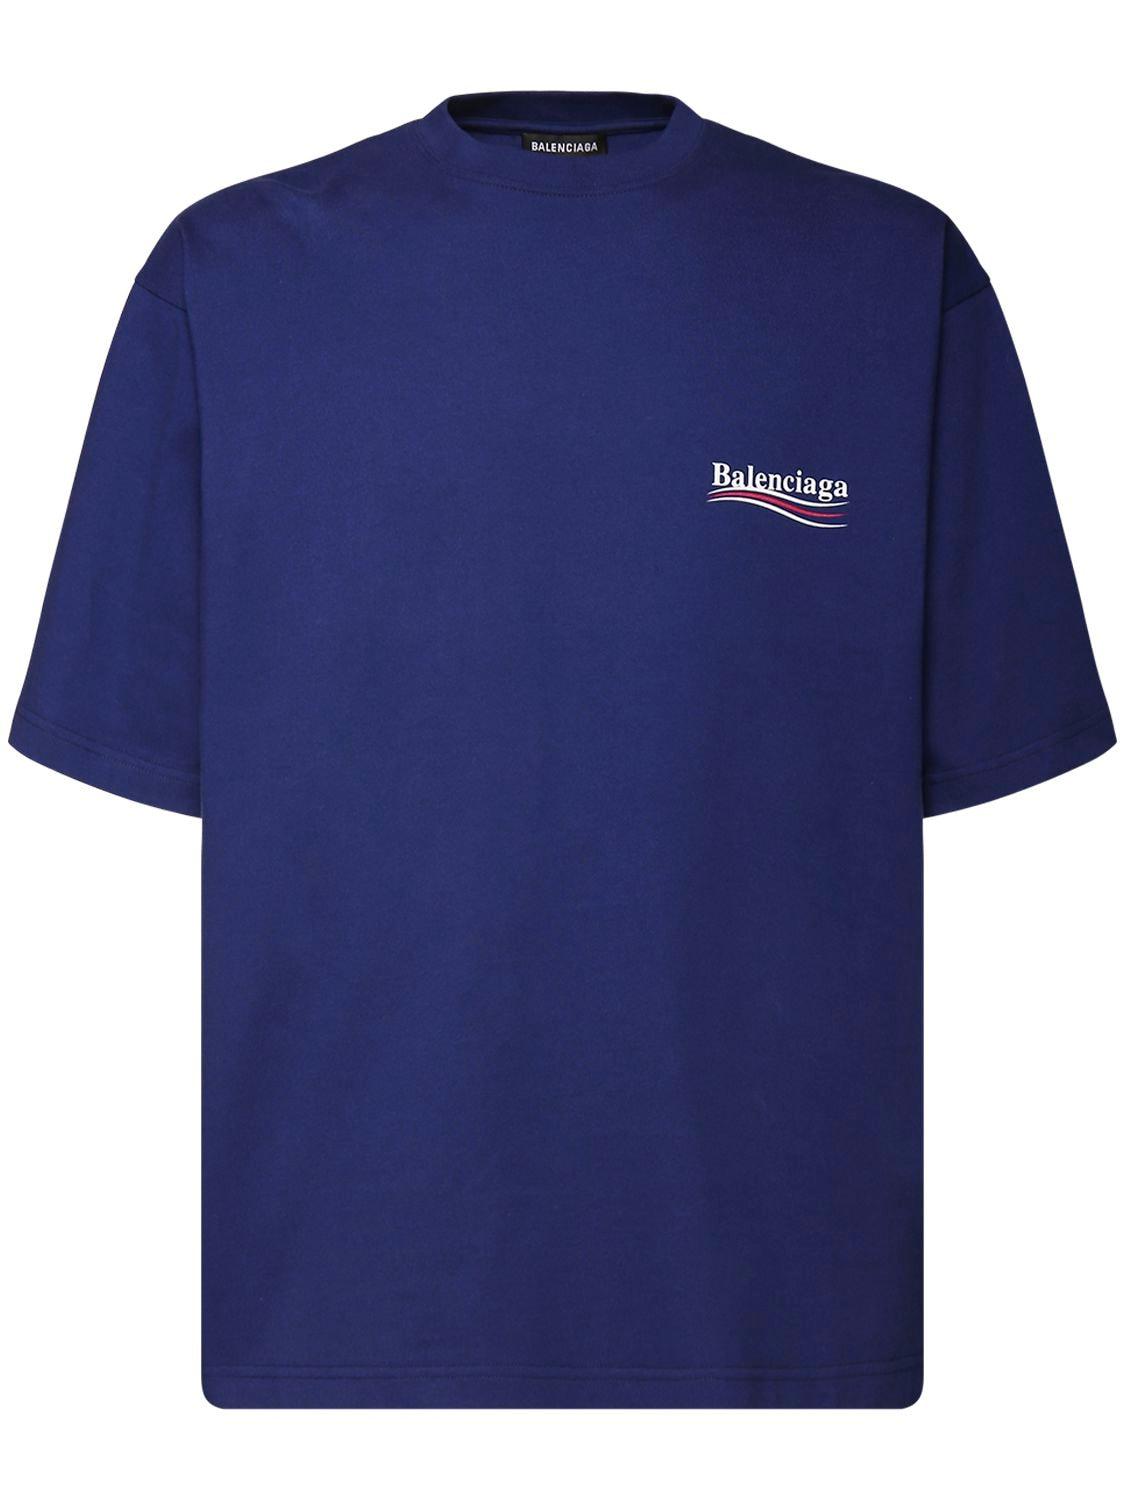 Balenciaga Cotton Logo Printed T-shirt in Blue for Men - Save 34% | Lyst